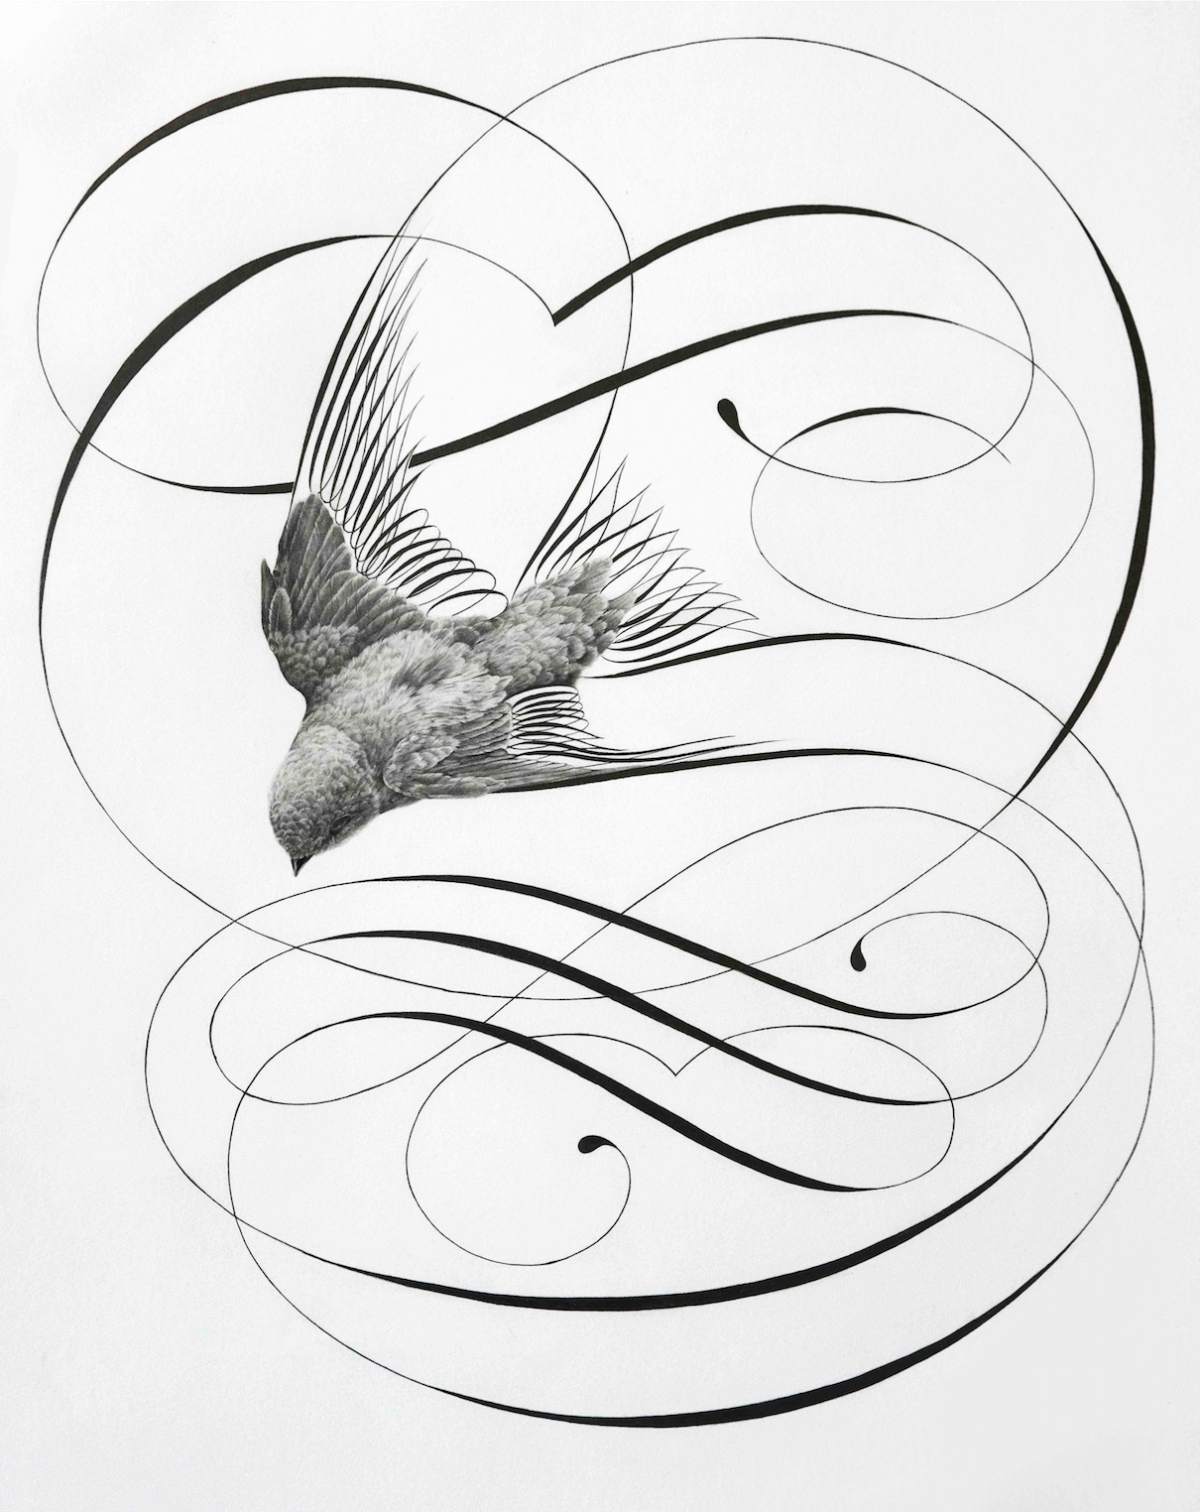 Jake Weidmann каллиграфия. Каллиграфическая р. Каллиграфическое рисование. Каллиграфия птицы. Рисование каллиграфией